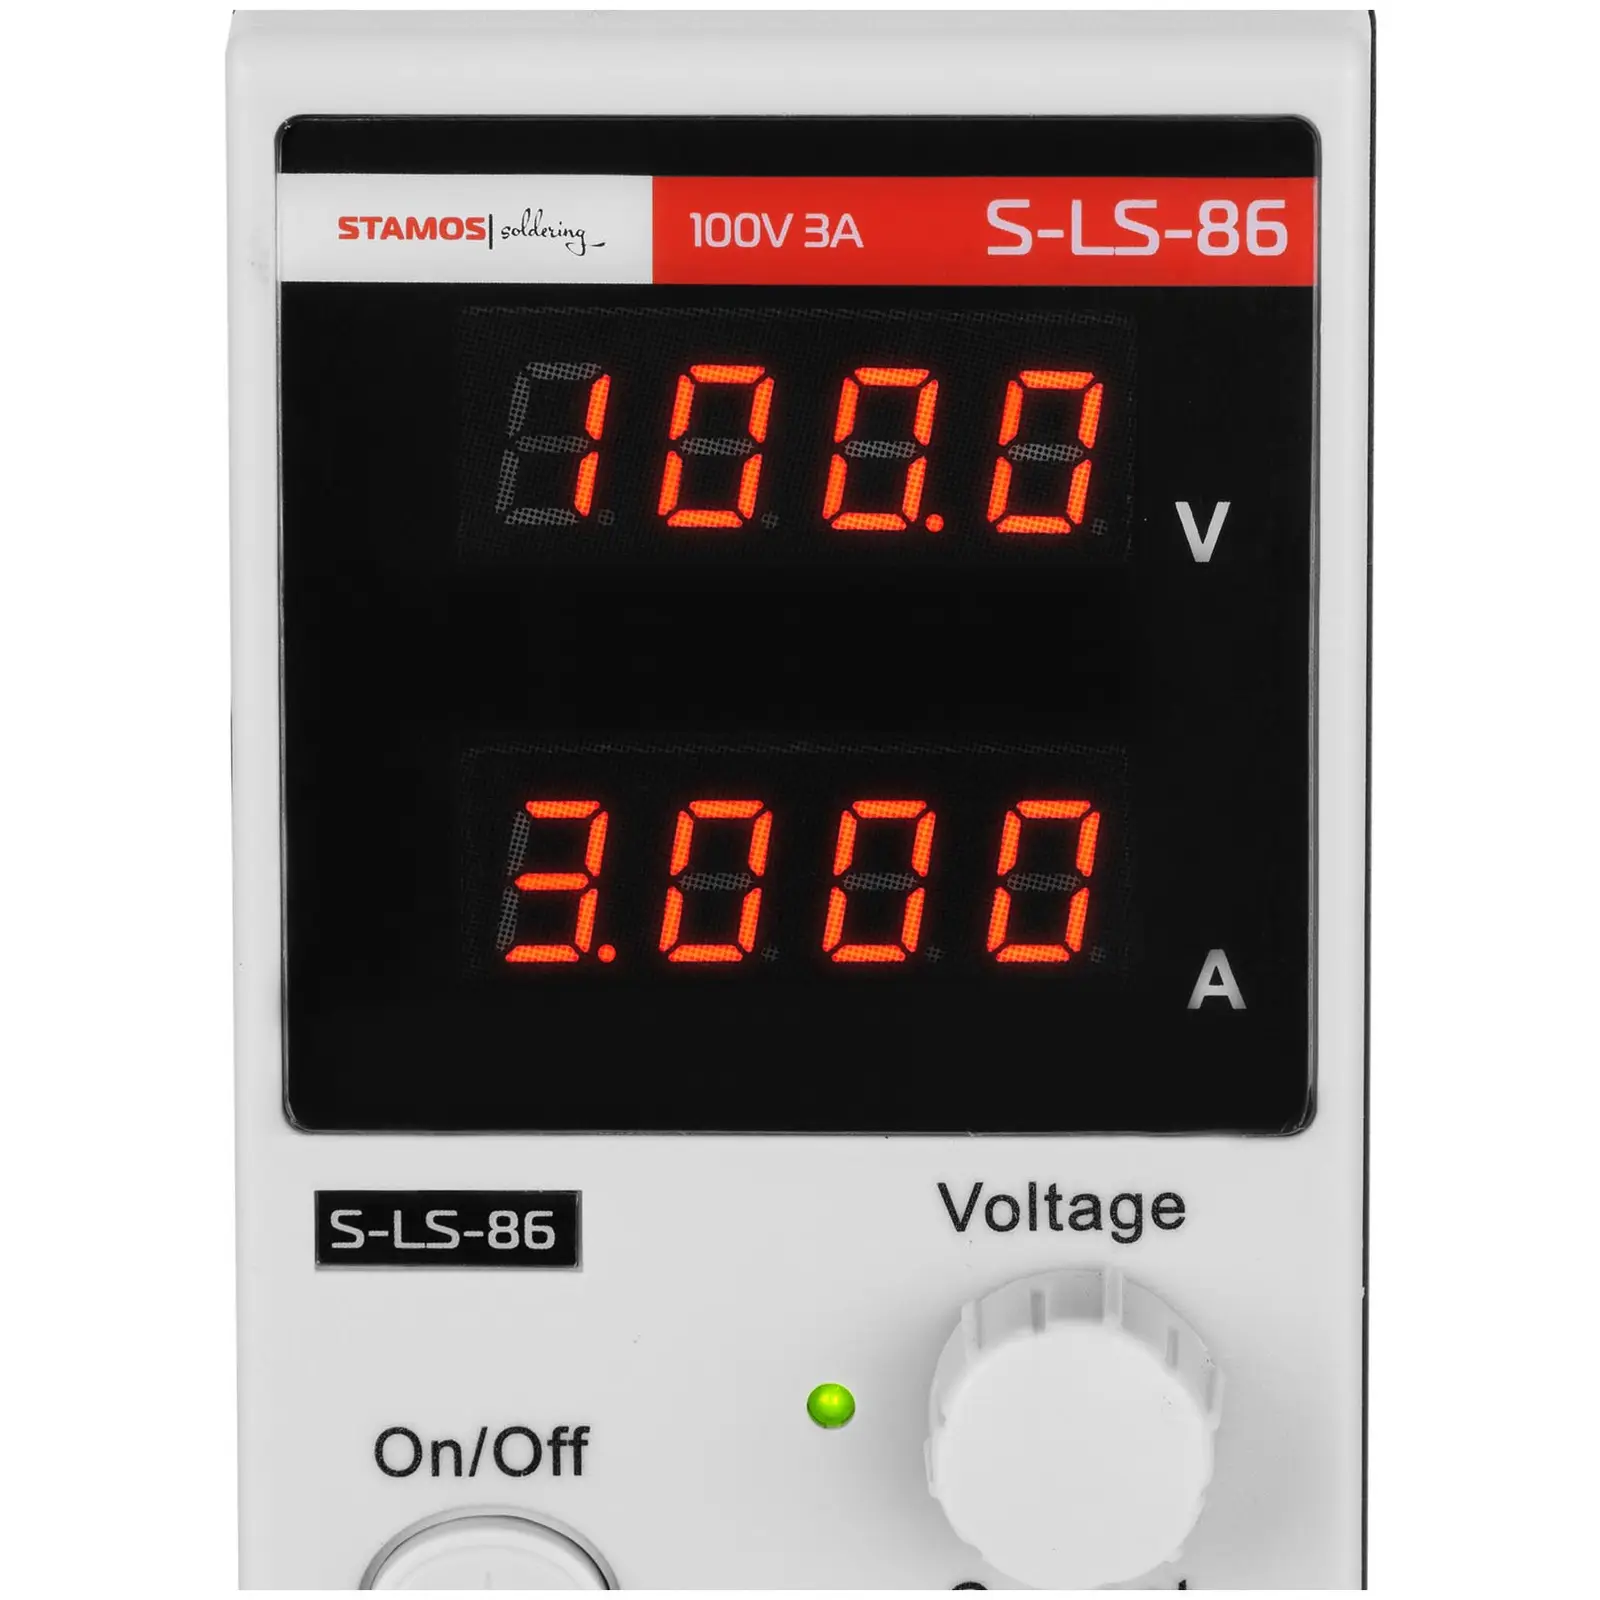 Alimentatore switching regolabile - 0-100 V - 0-3 A CC - 300 W - Protezione OPP e OTP - Grande display LED